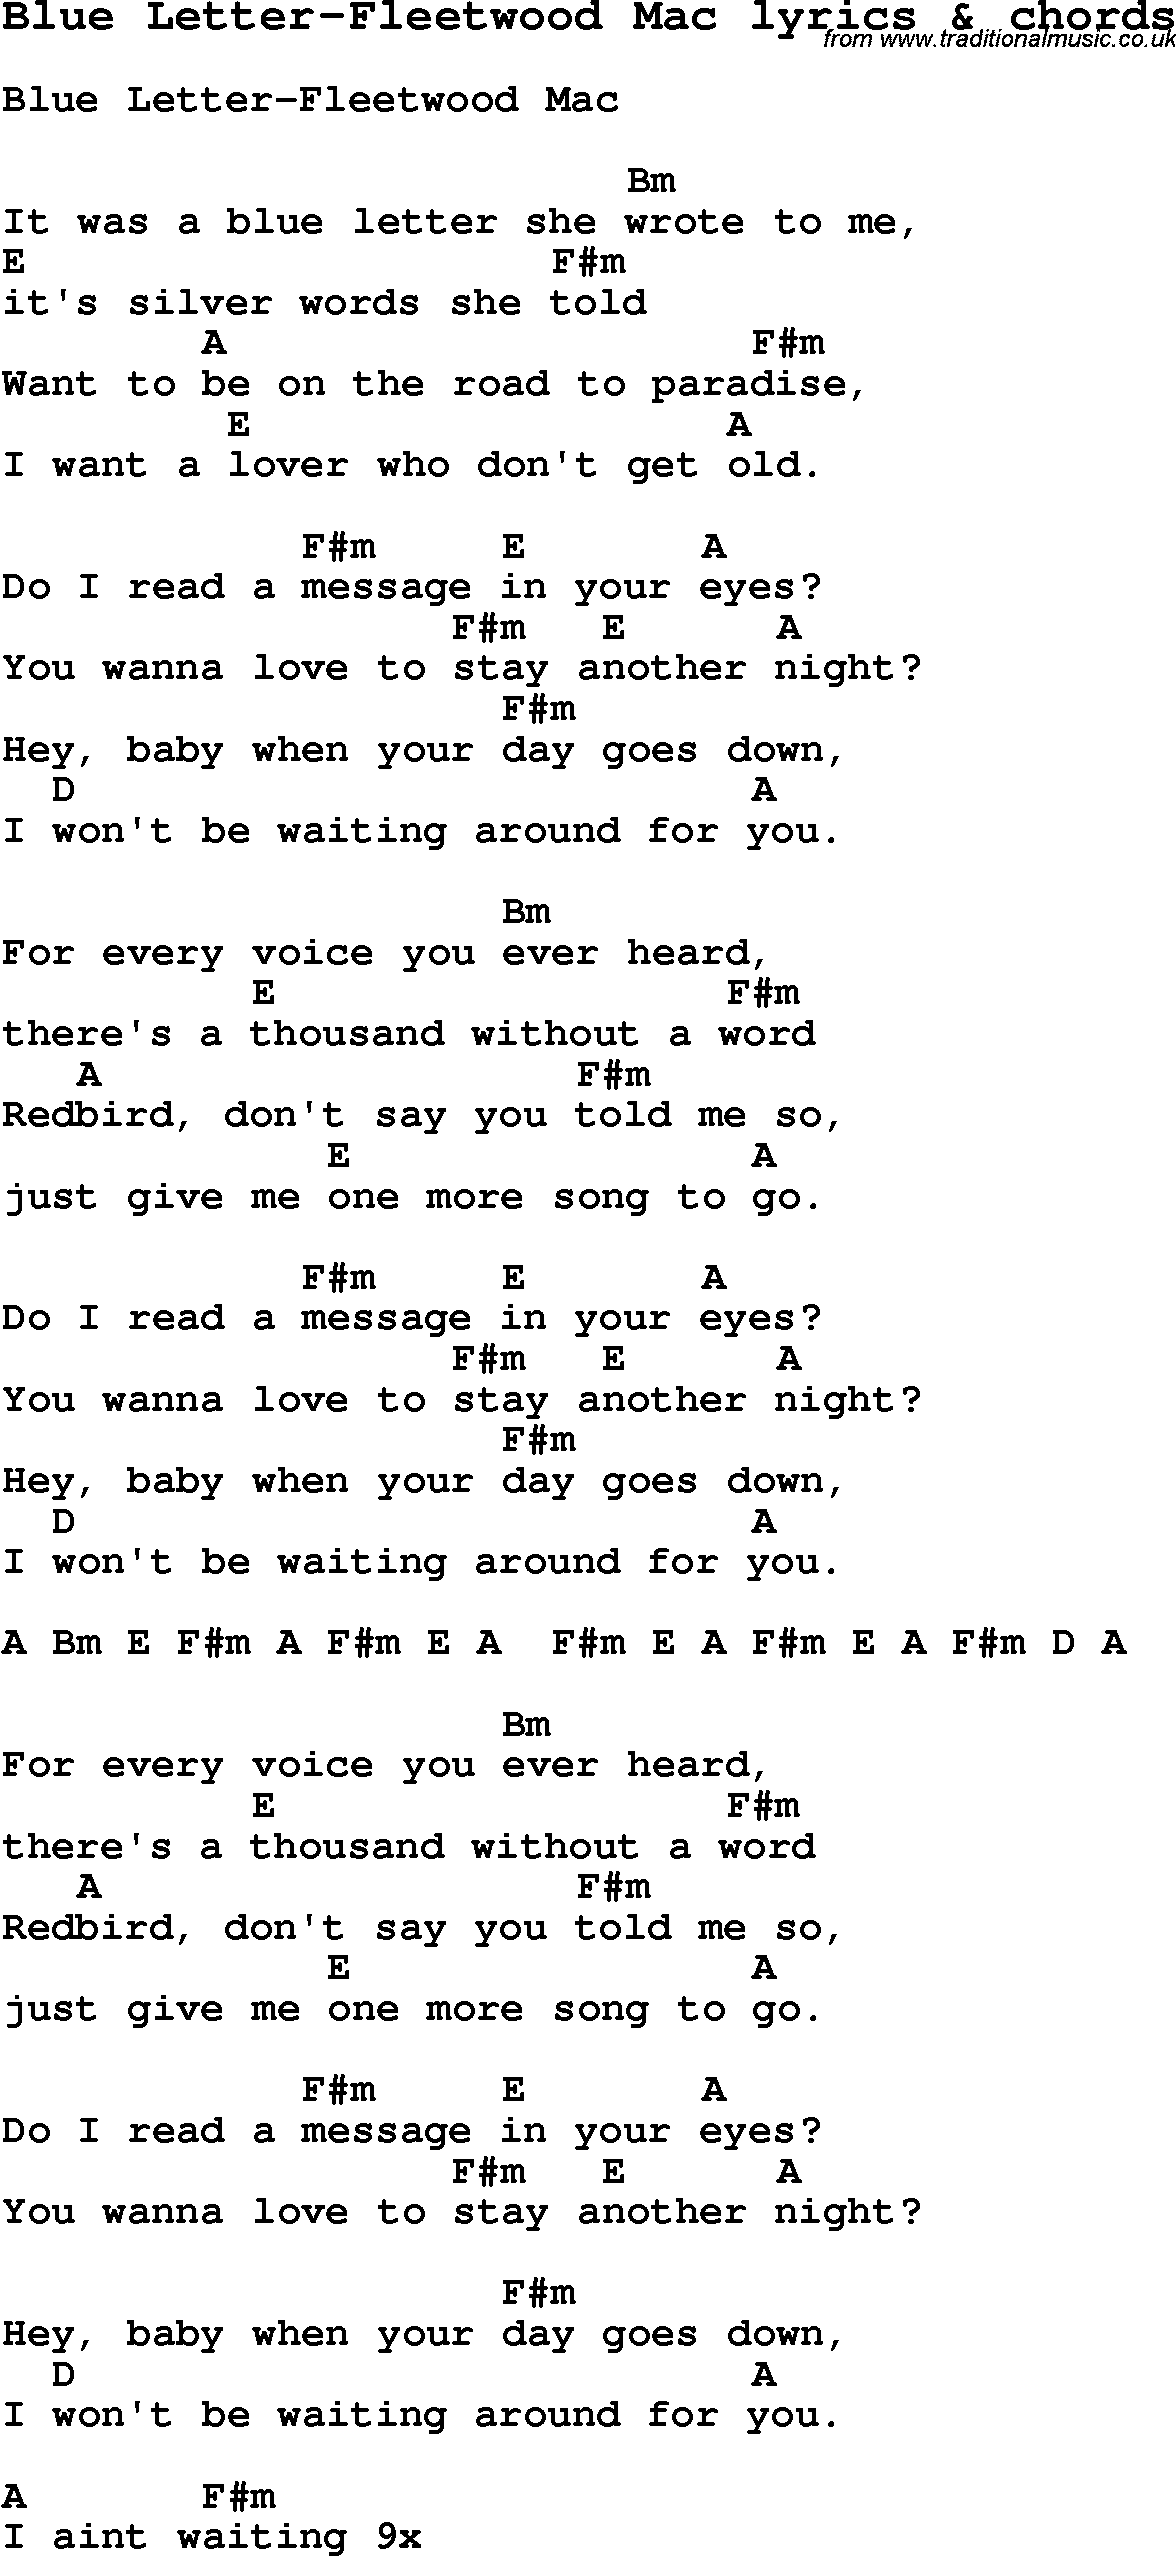 Love Song Lyrics for: Blue Letter-Fleetwood Mac with chords for Ukulele, Guitar Banjo etc.